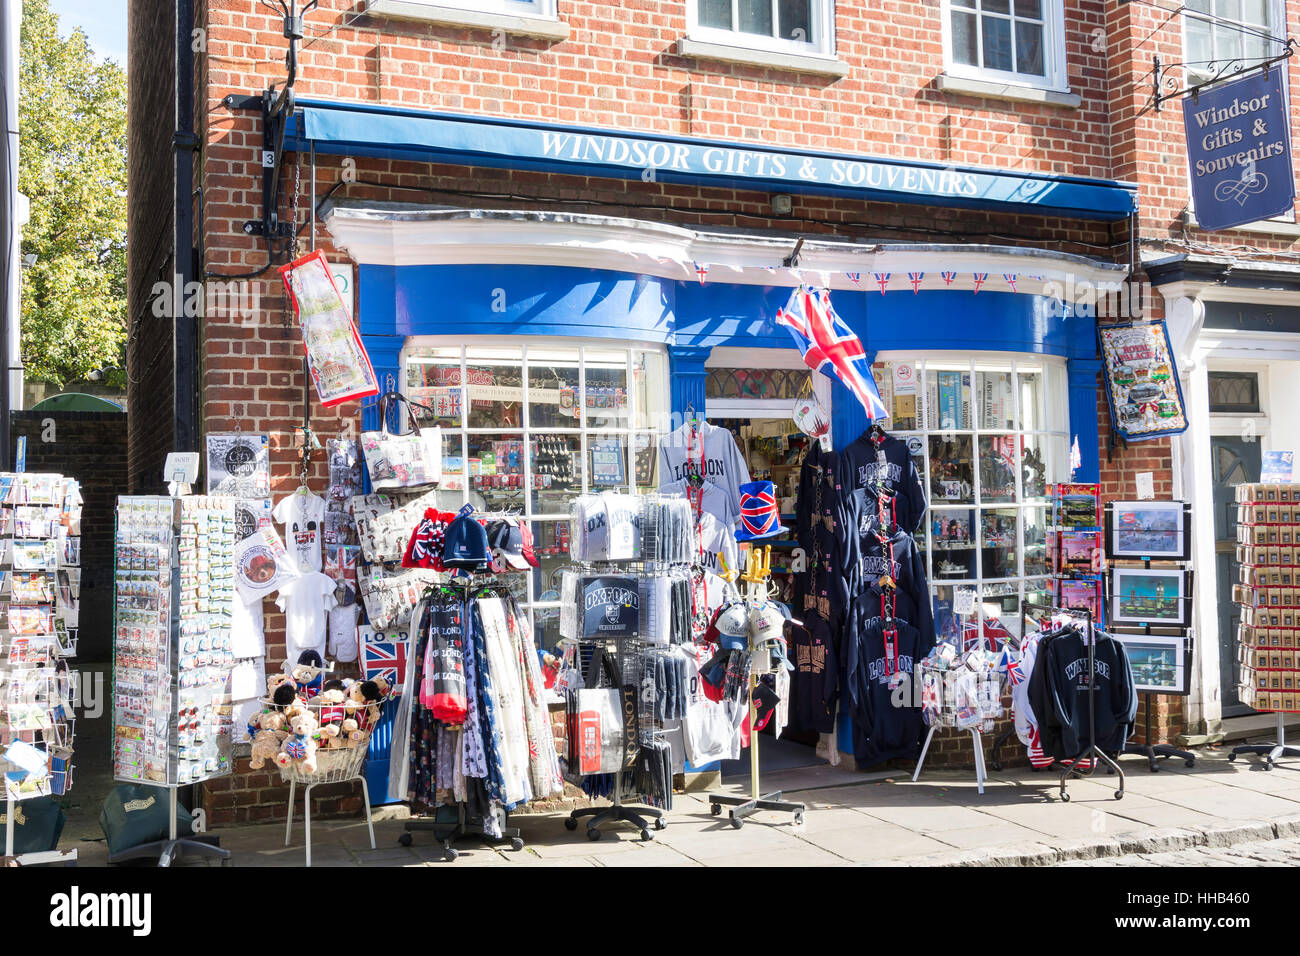 Windsor Gift & Souvenir shop, Church Street, Windsor, Berkshire, England, United Kingdom Stock Photo